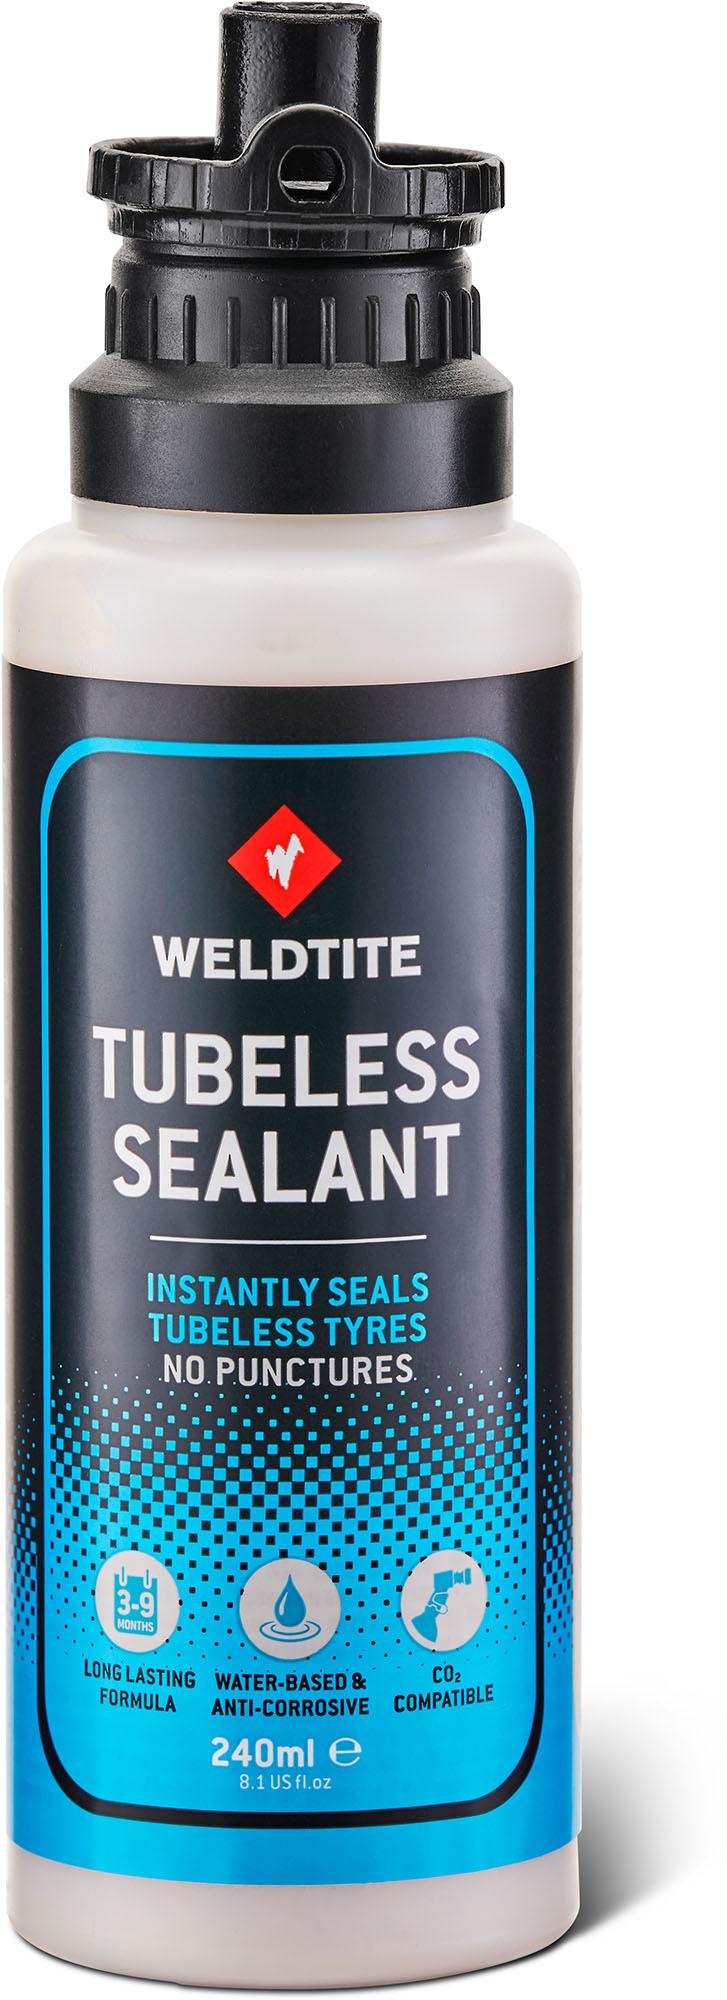 Weldtite Tubeless Tyre Sealant - 240ml  Black